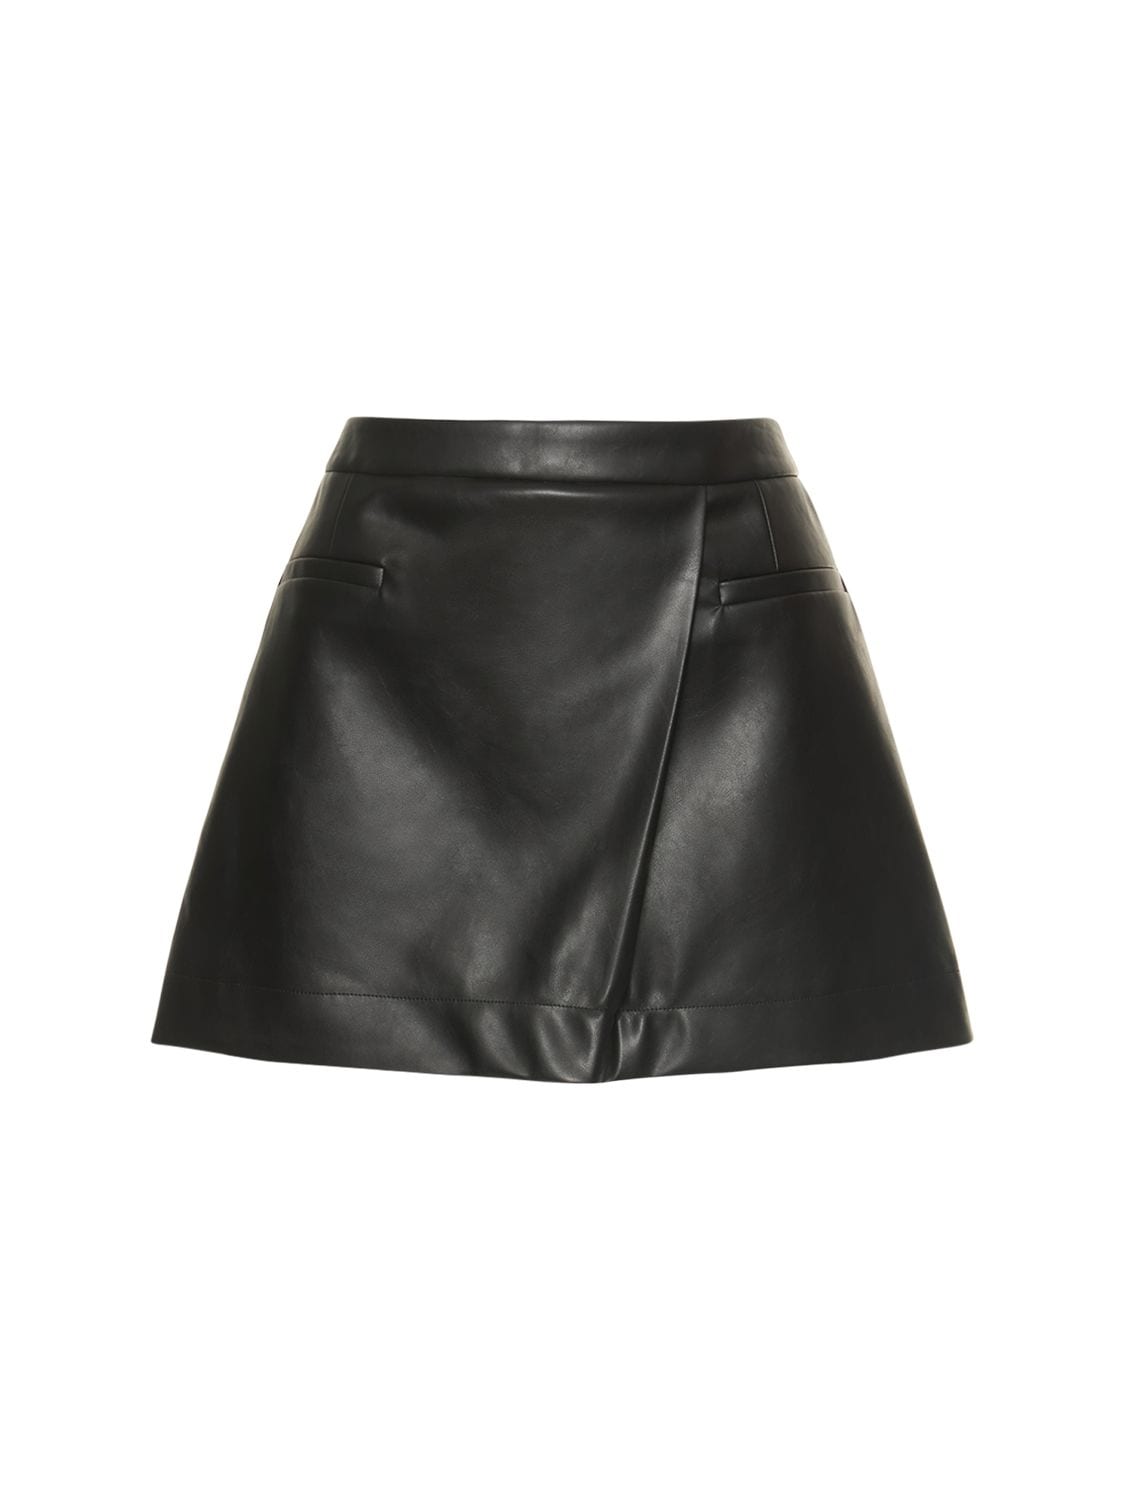 Marie Faux Leather Mini Skirt